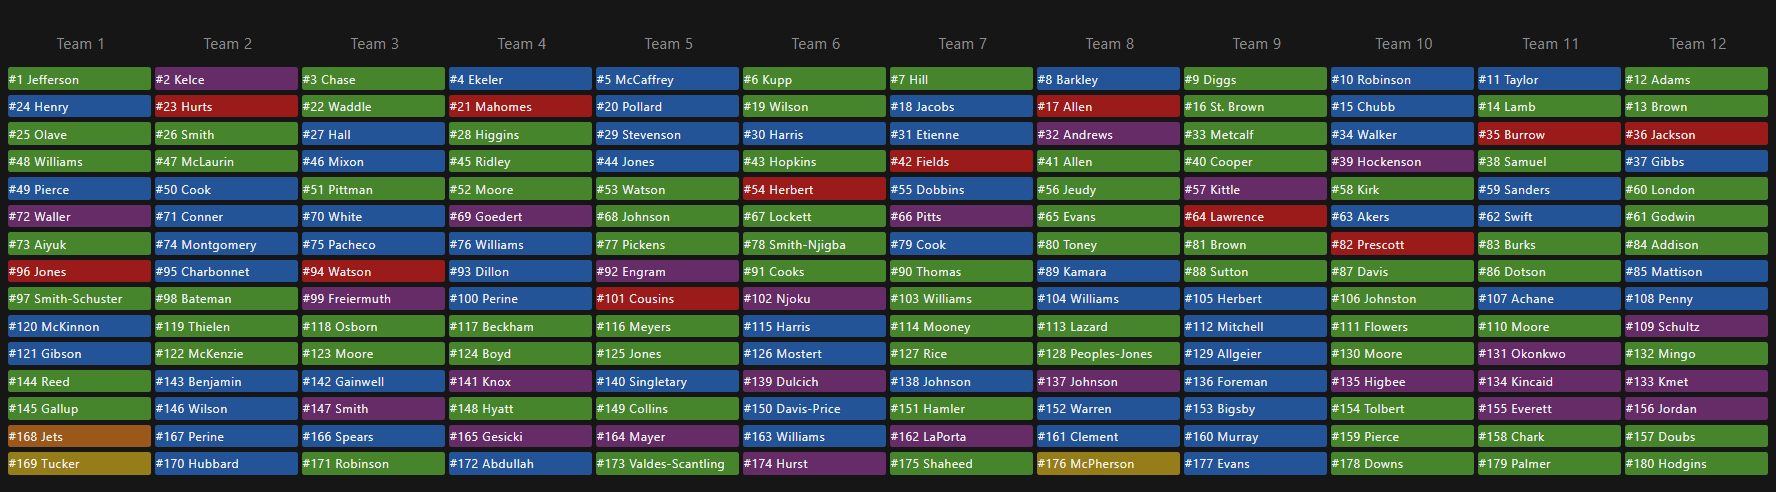 Fantasy Football Expert League Draft Results and Picks: 10 Team, PPR Scoring